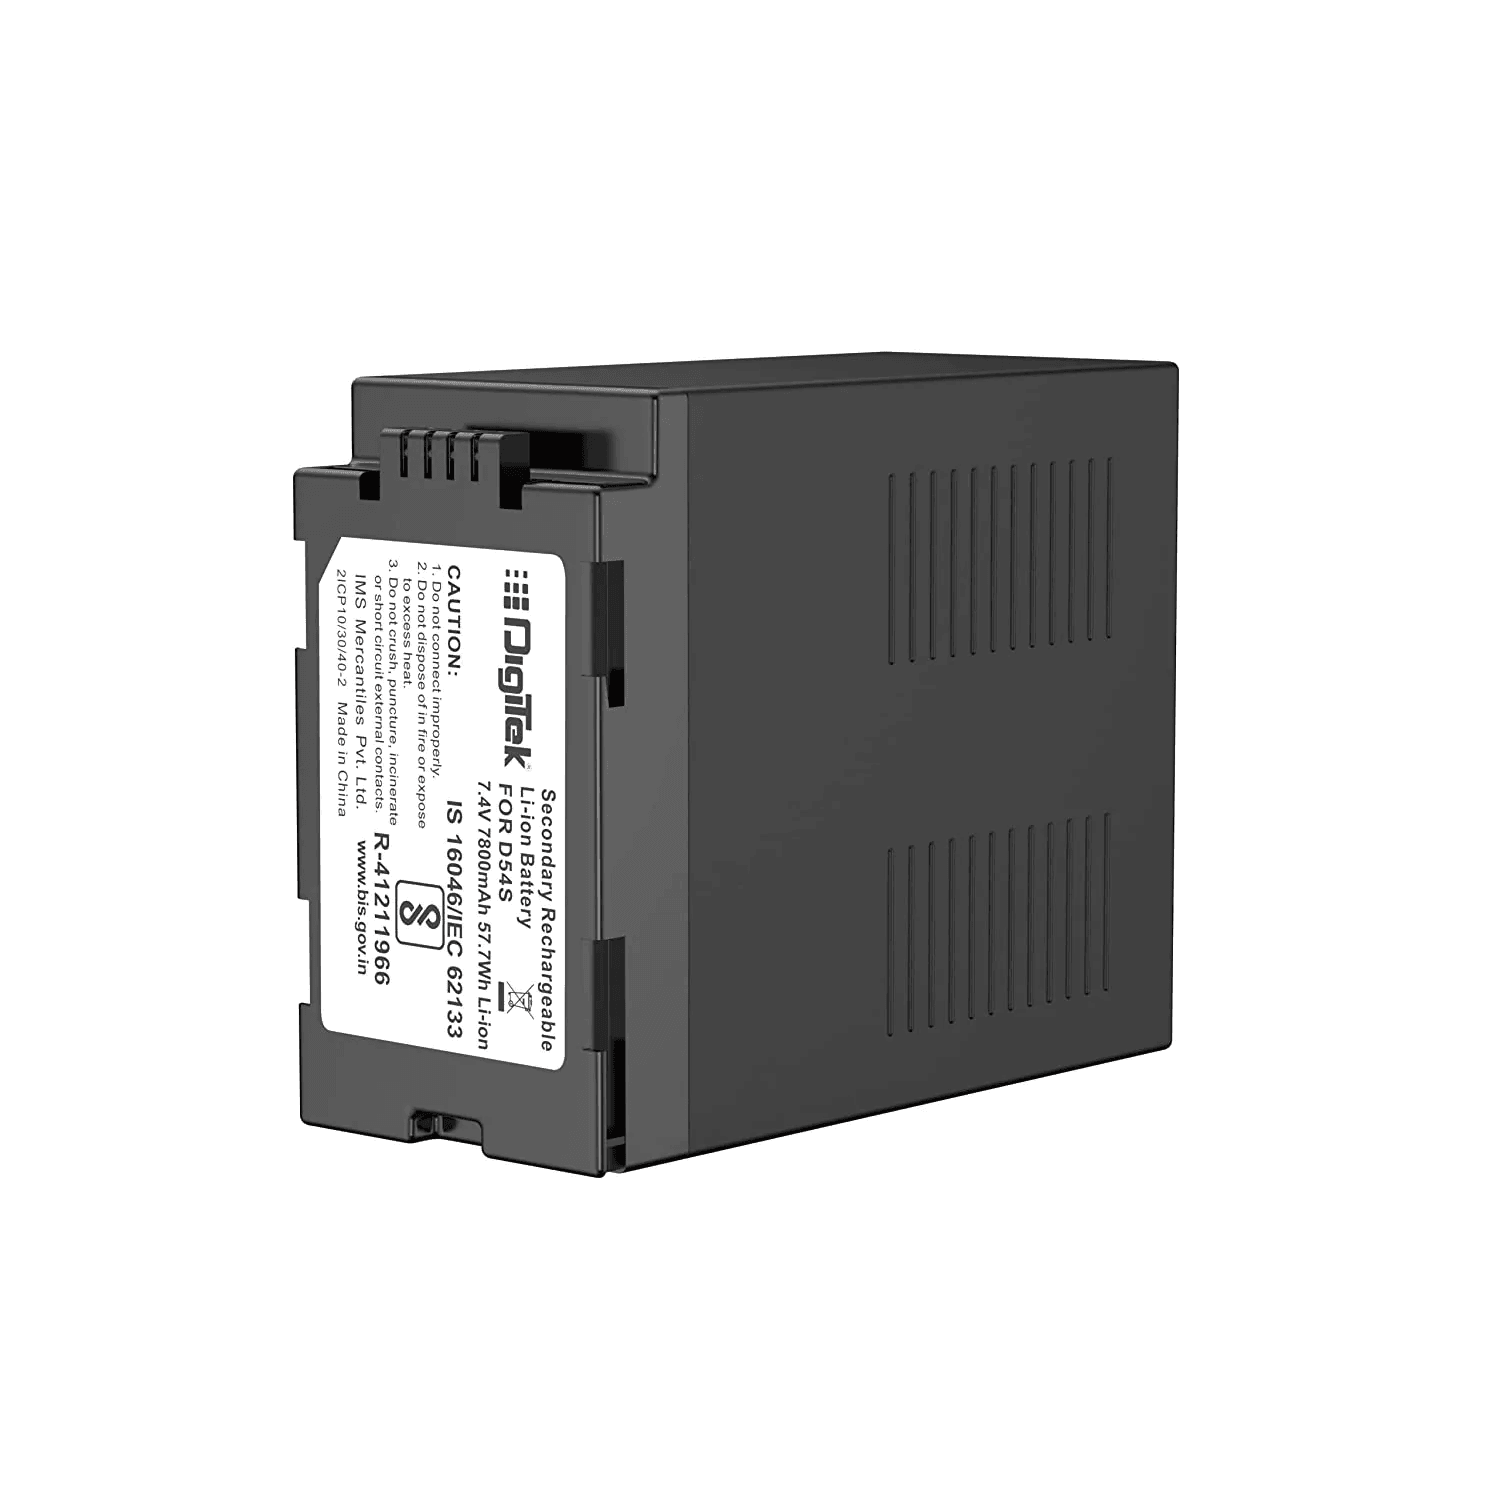 Digitek (D-54S) 7800 mAh 7.4V Secondary Rechargeable Lithium Ion Battery Pack - Digitek